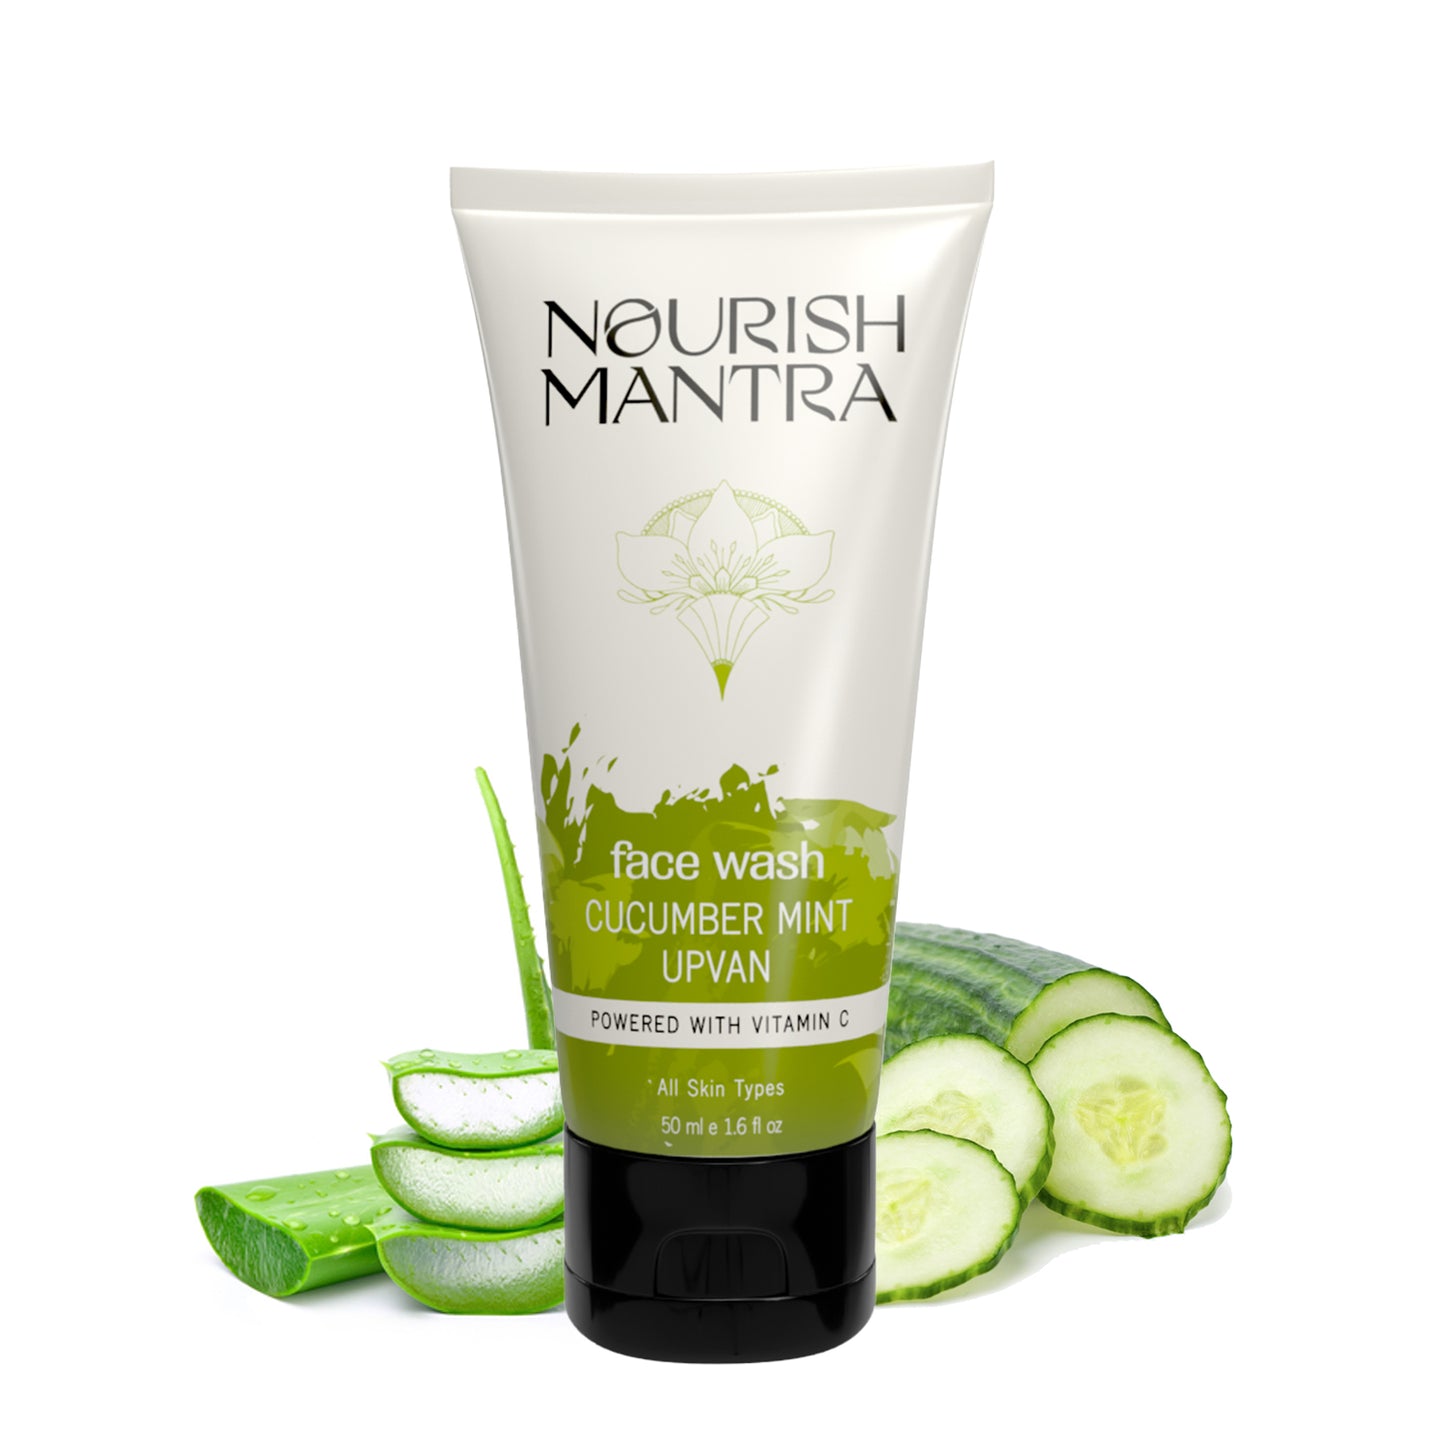 Cucumber Mint Upvan Face Wash 50g - Nourish Mantra